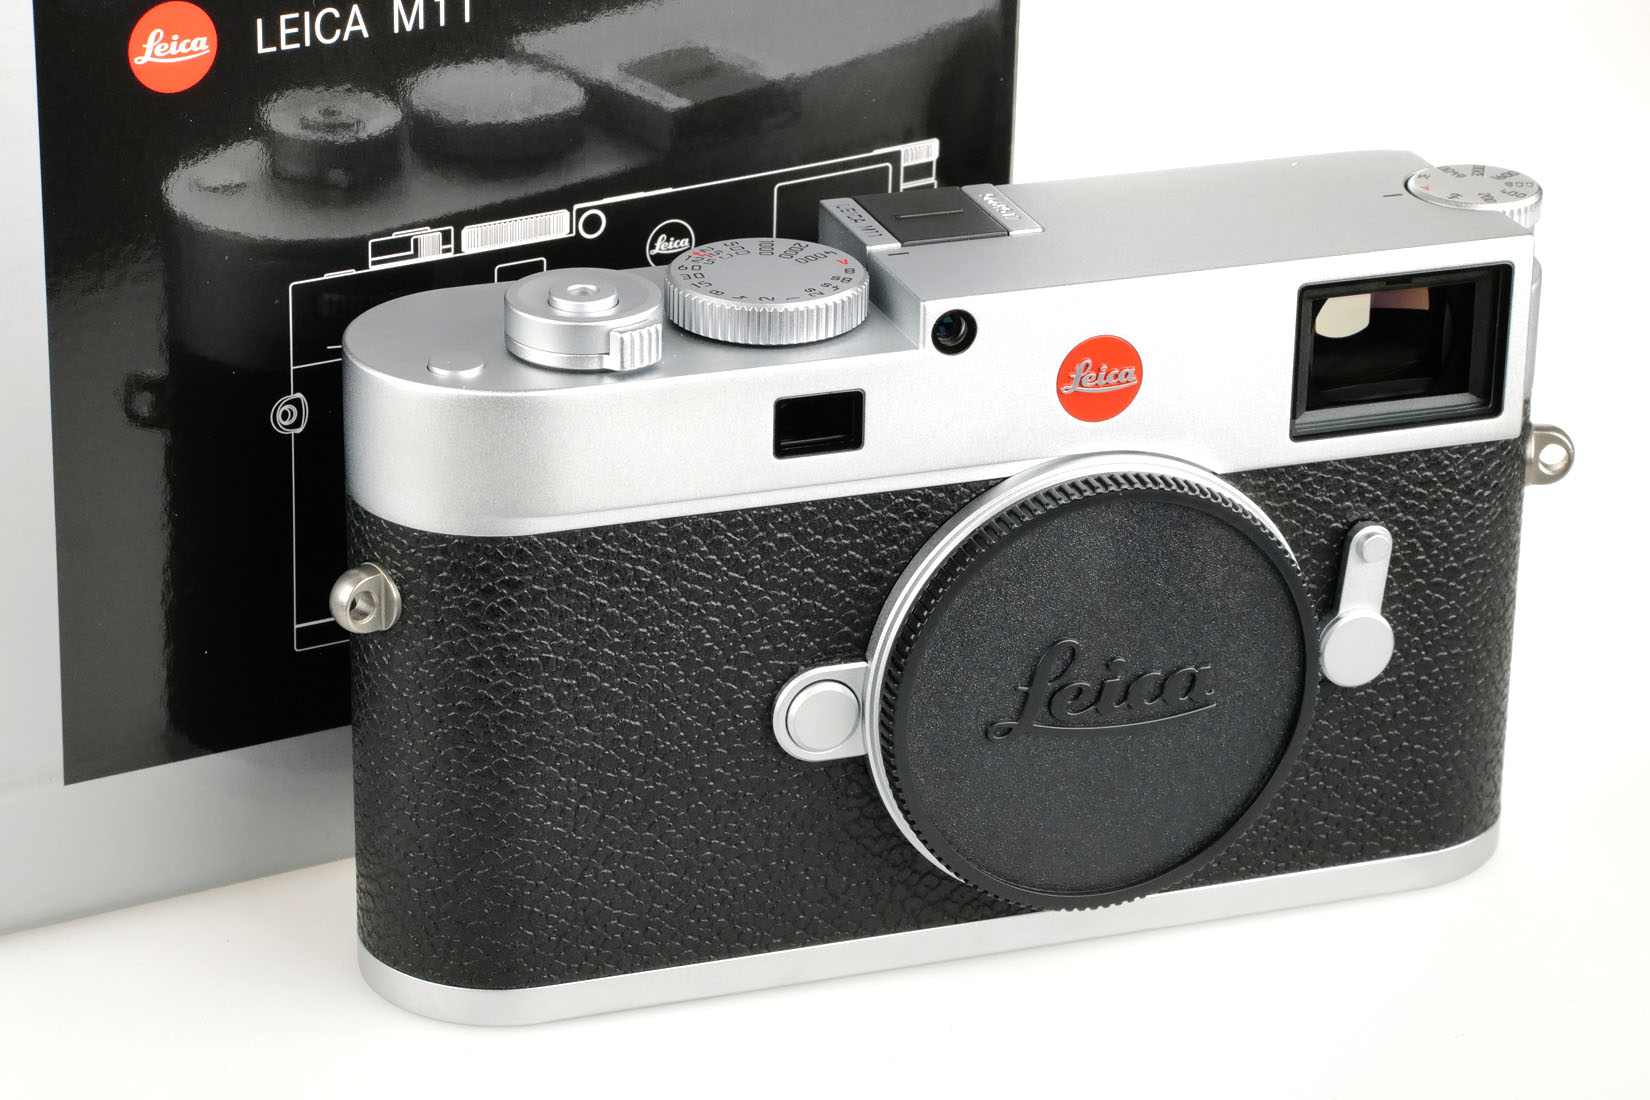 Leica M11, silbern verchromt ( EU/US/CN) 20201